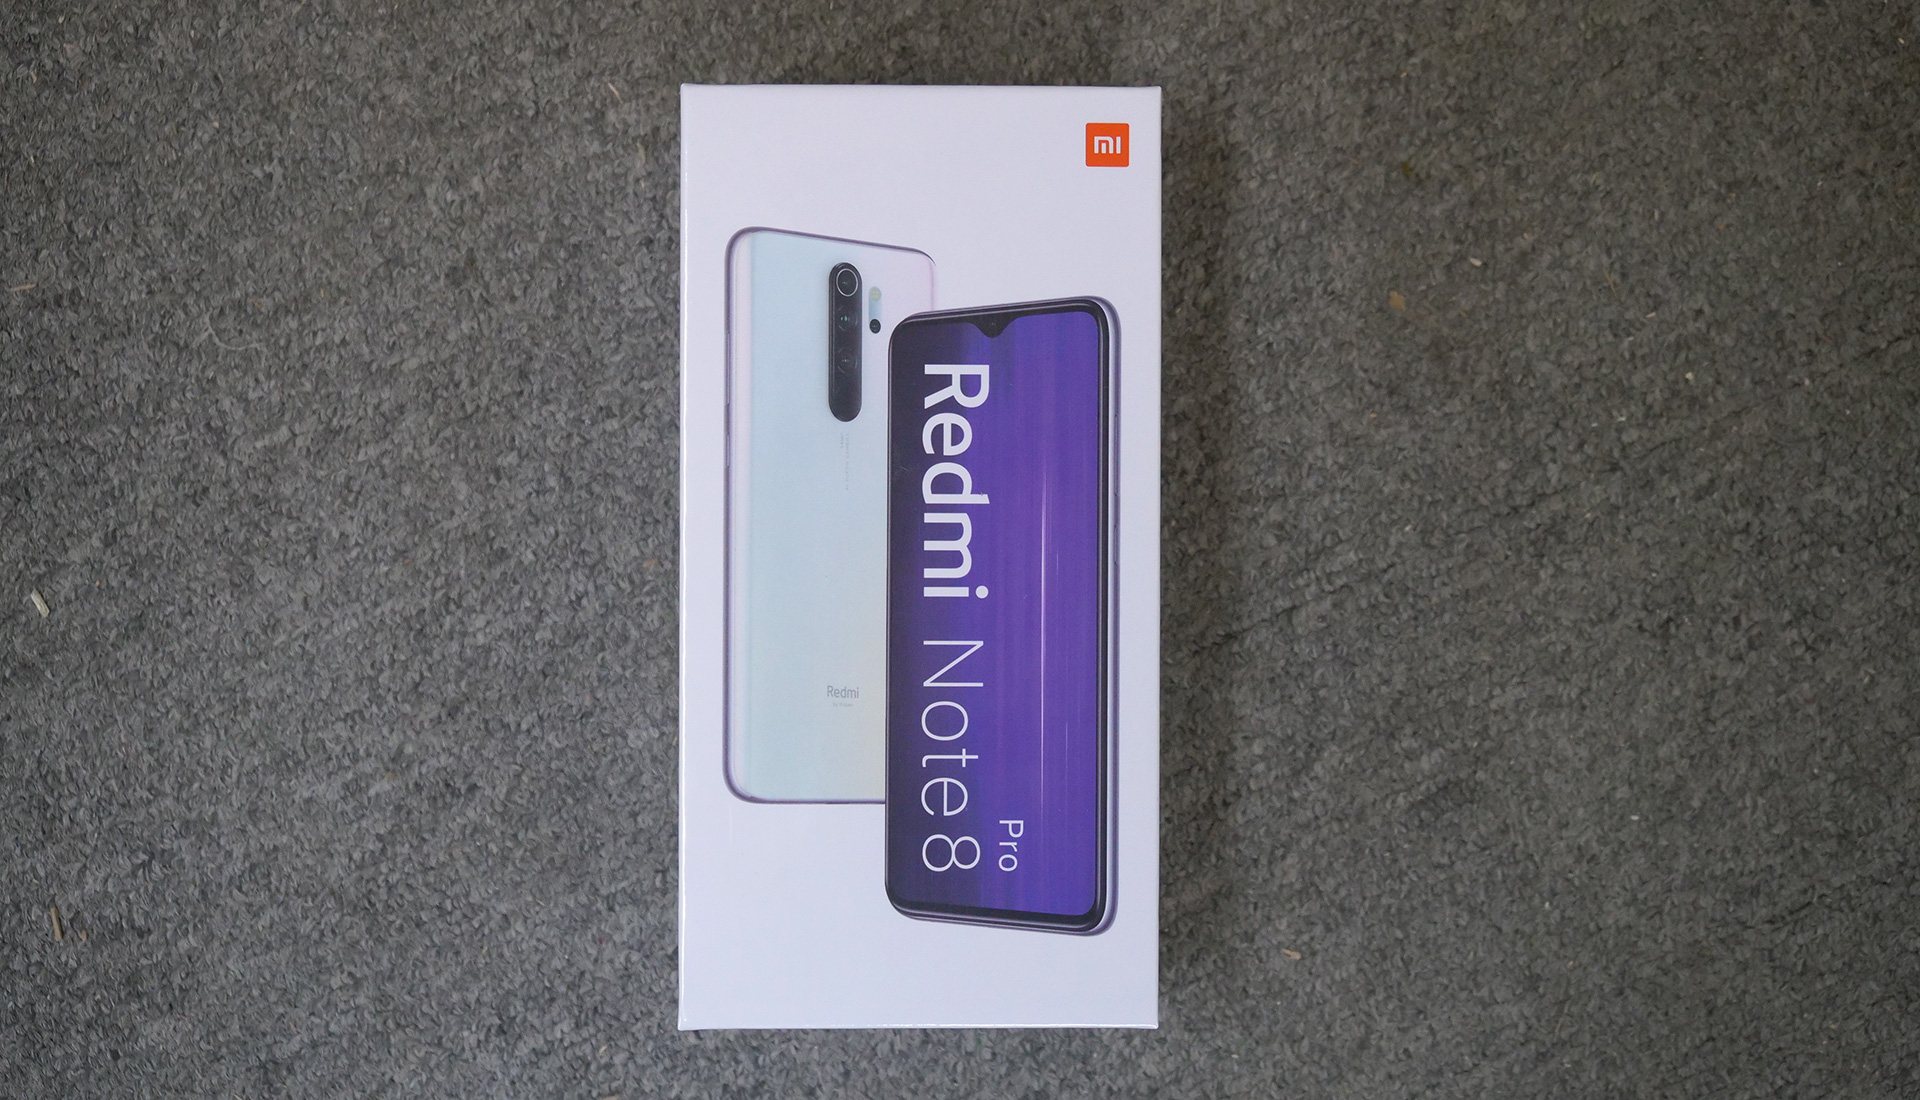 Redmi Note 9 Global Купить